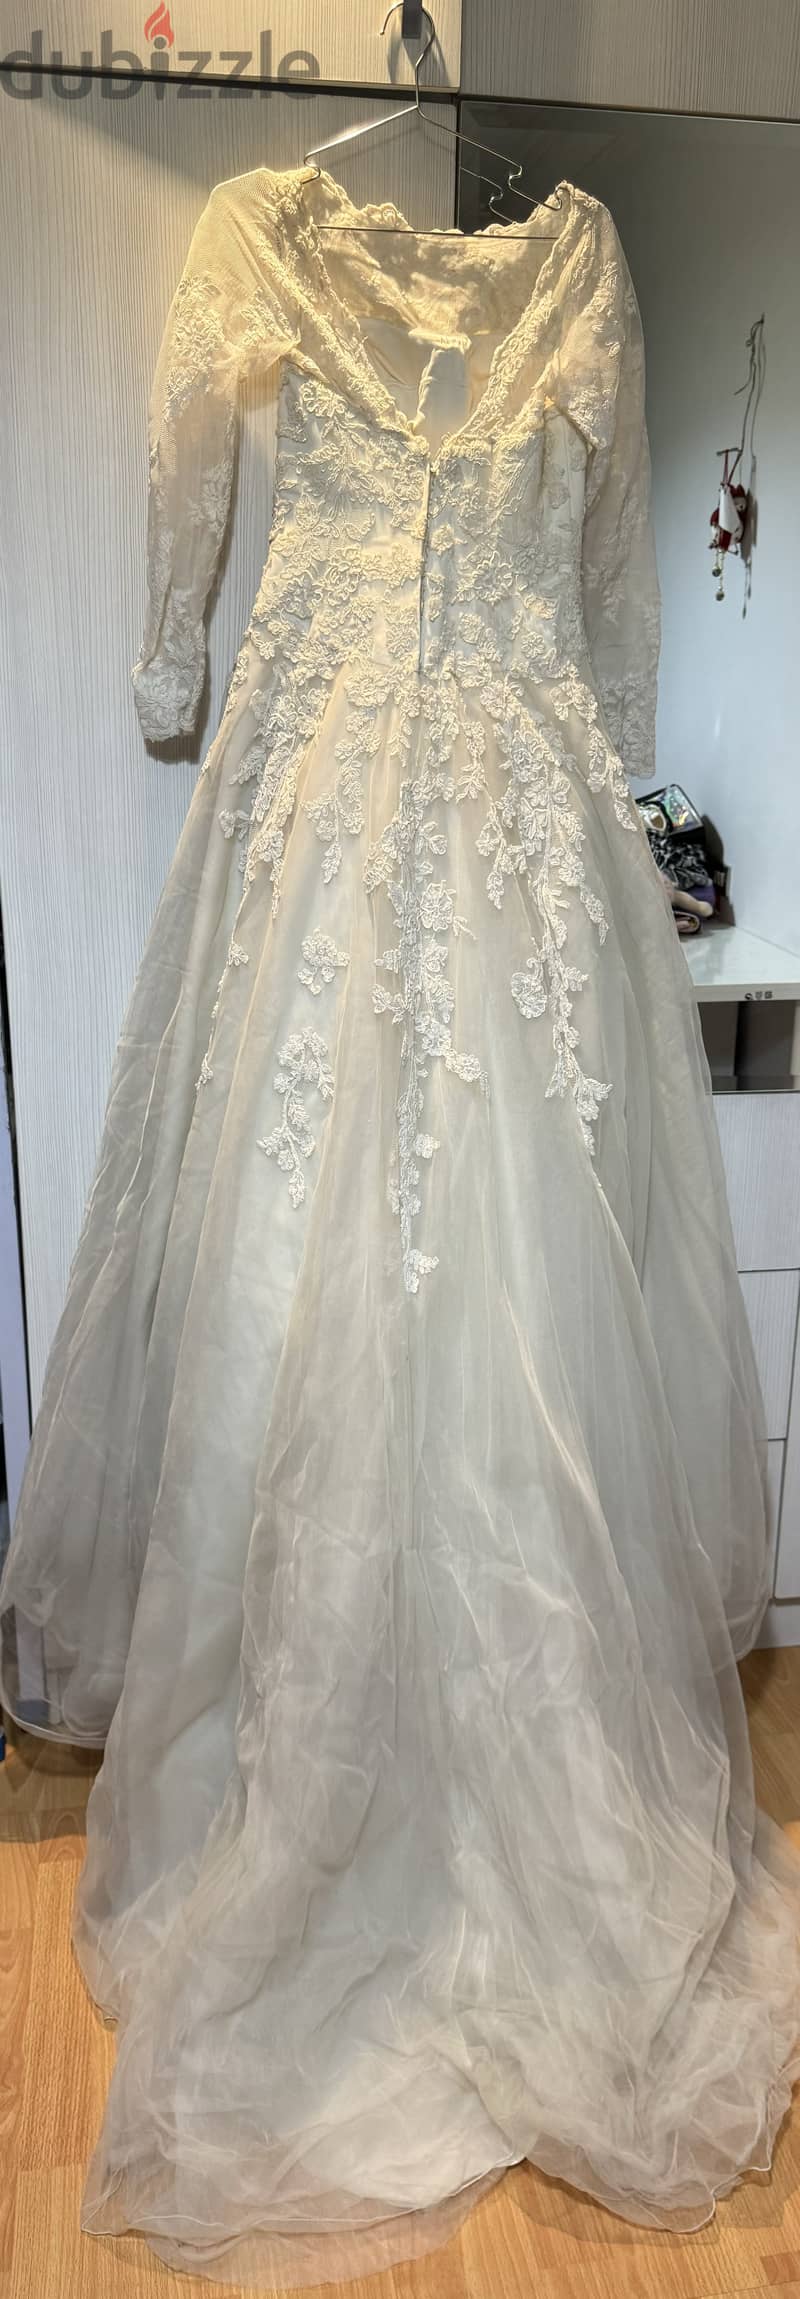 Wedding dress Justin Alexander Lace Ball Gown فستان فرح من دبي 2